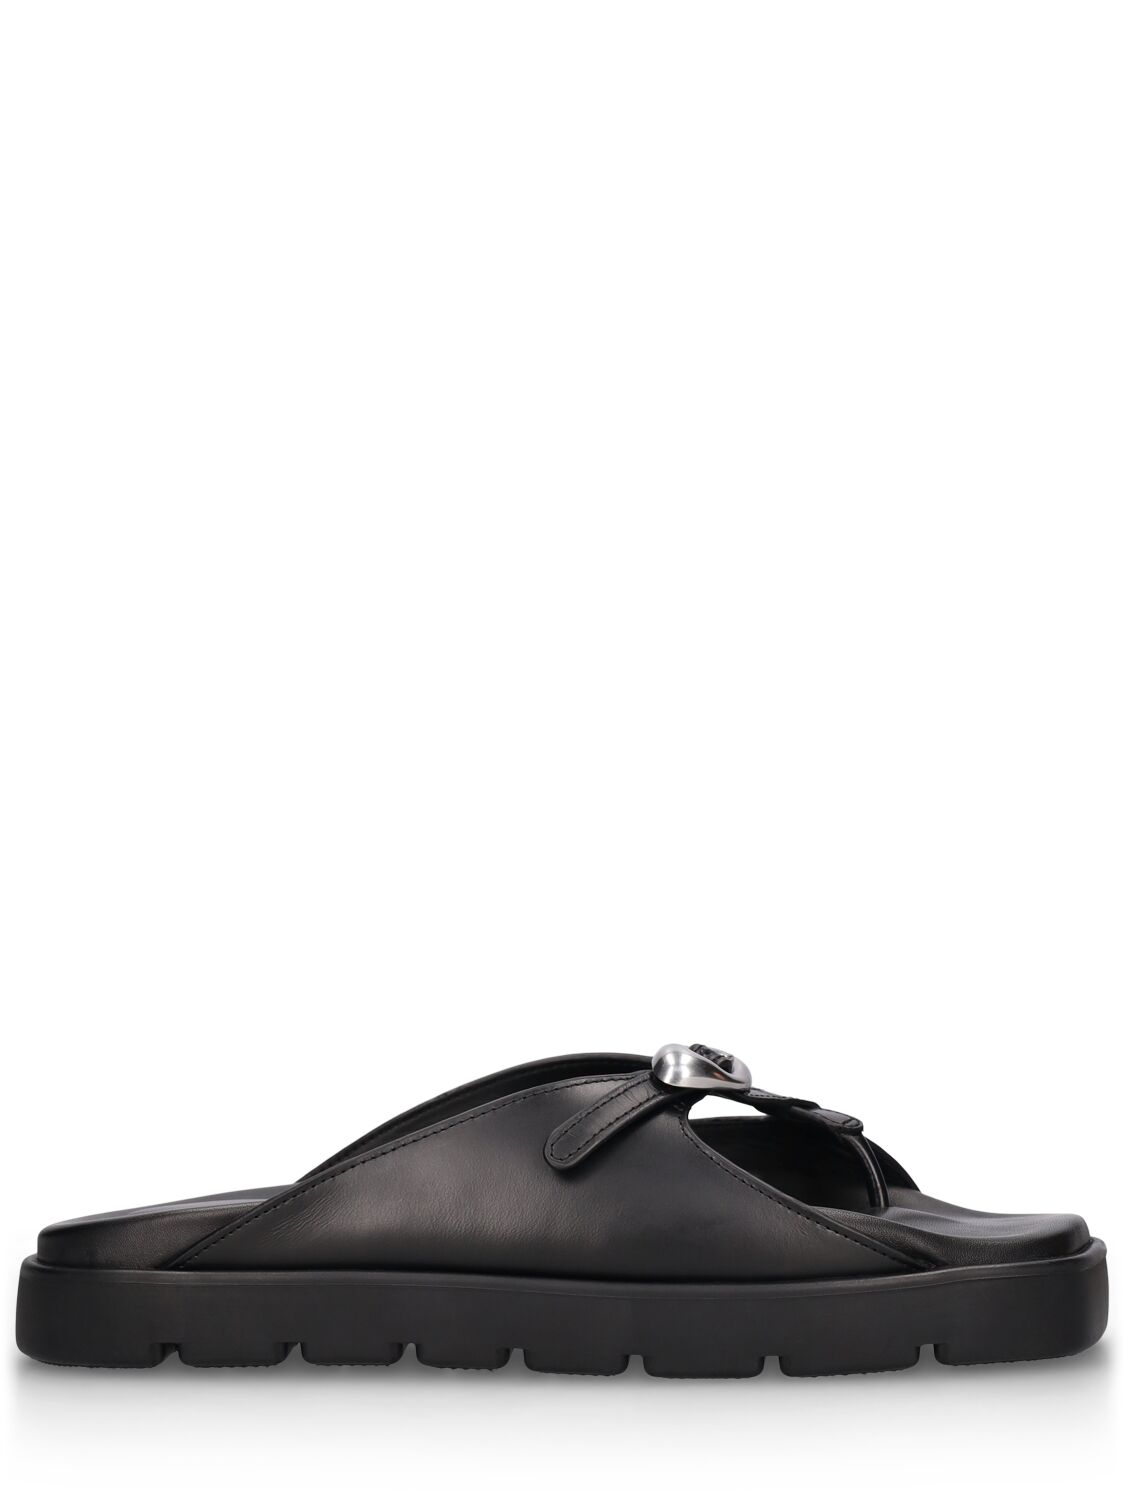 Alexander Wang 20mm Dome Leather Flatform Sandals In Black